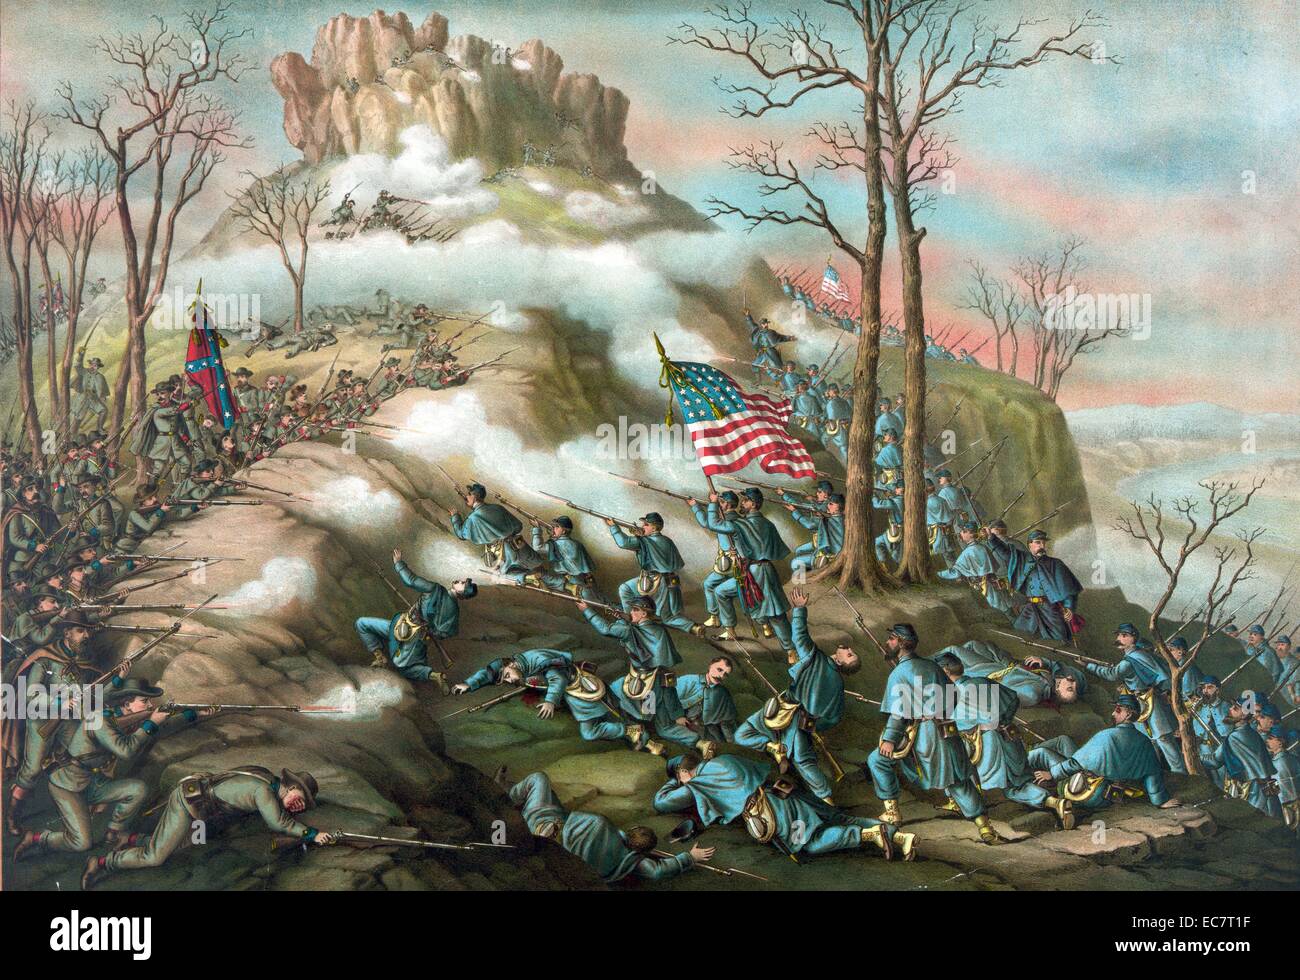 Part of the American Civil War - The Battle of Pea Ridge, Northwest Arkansas 1862. Stock Photo